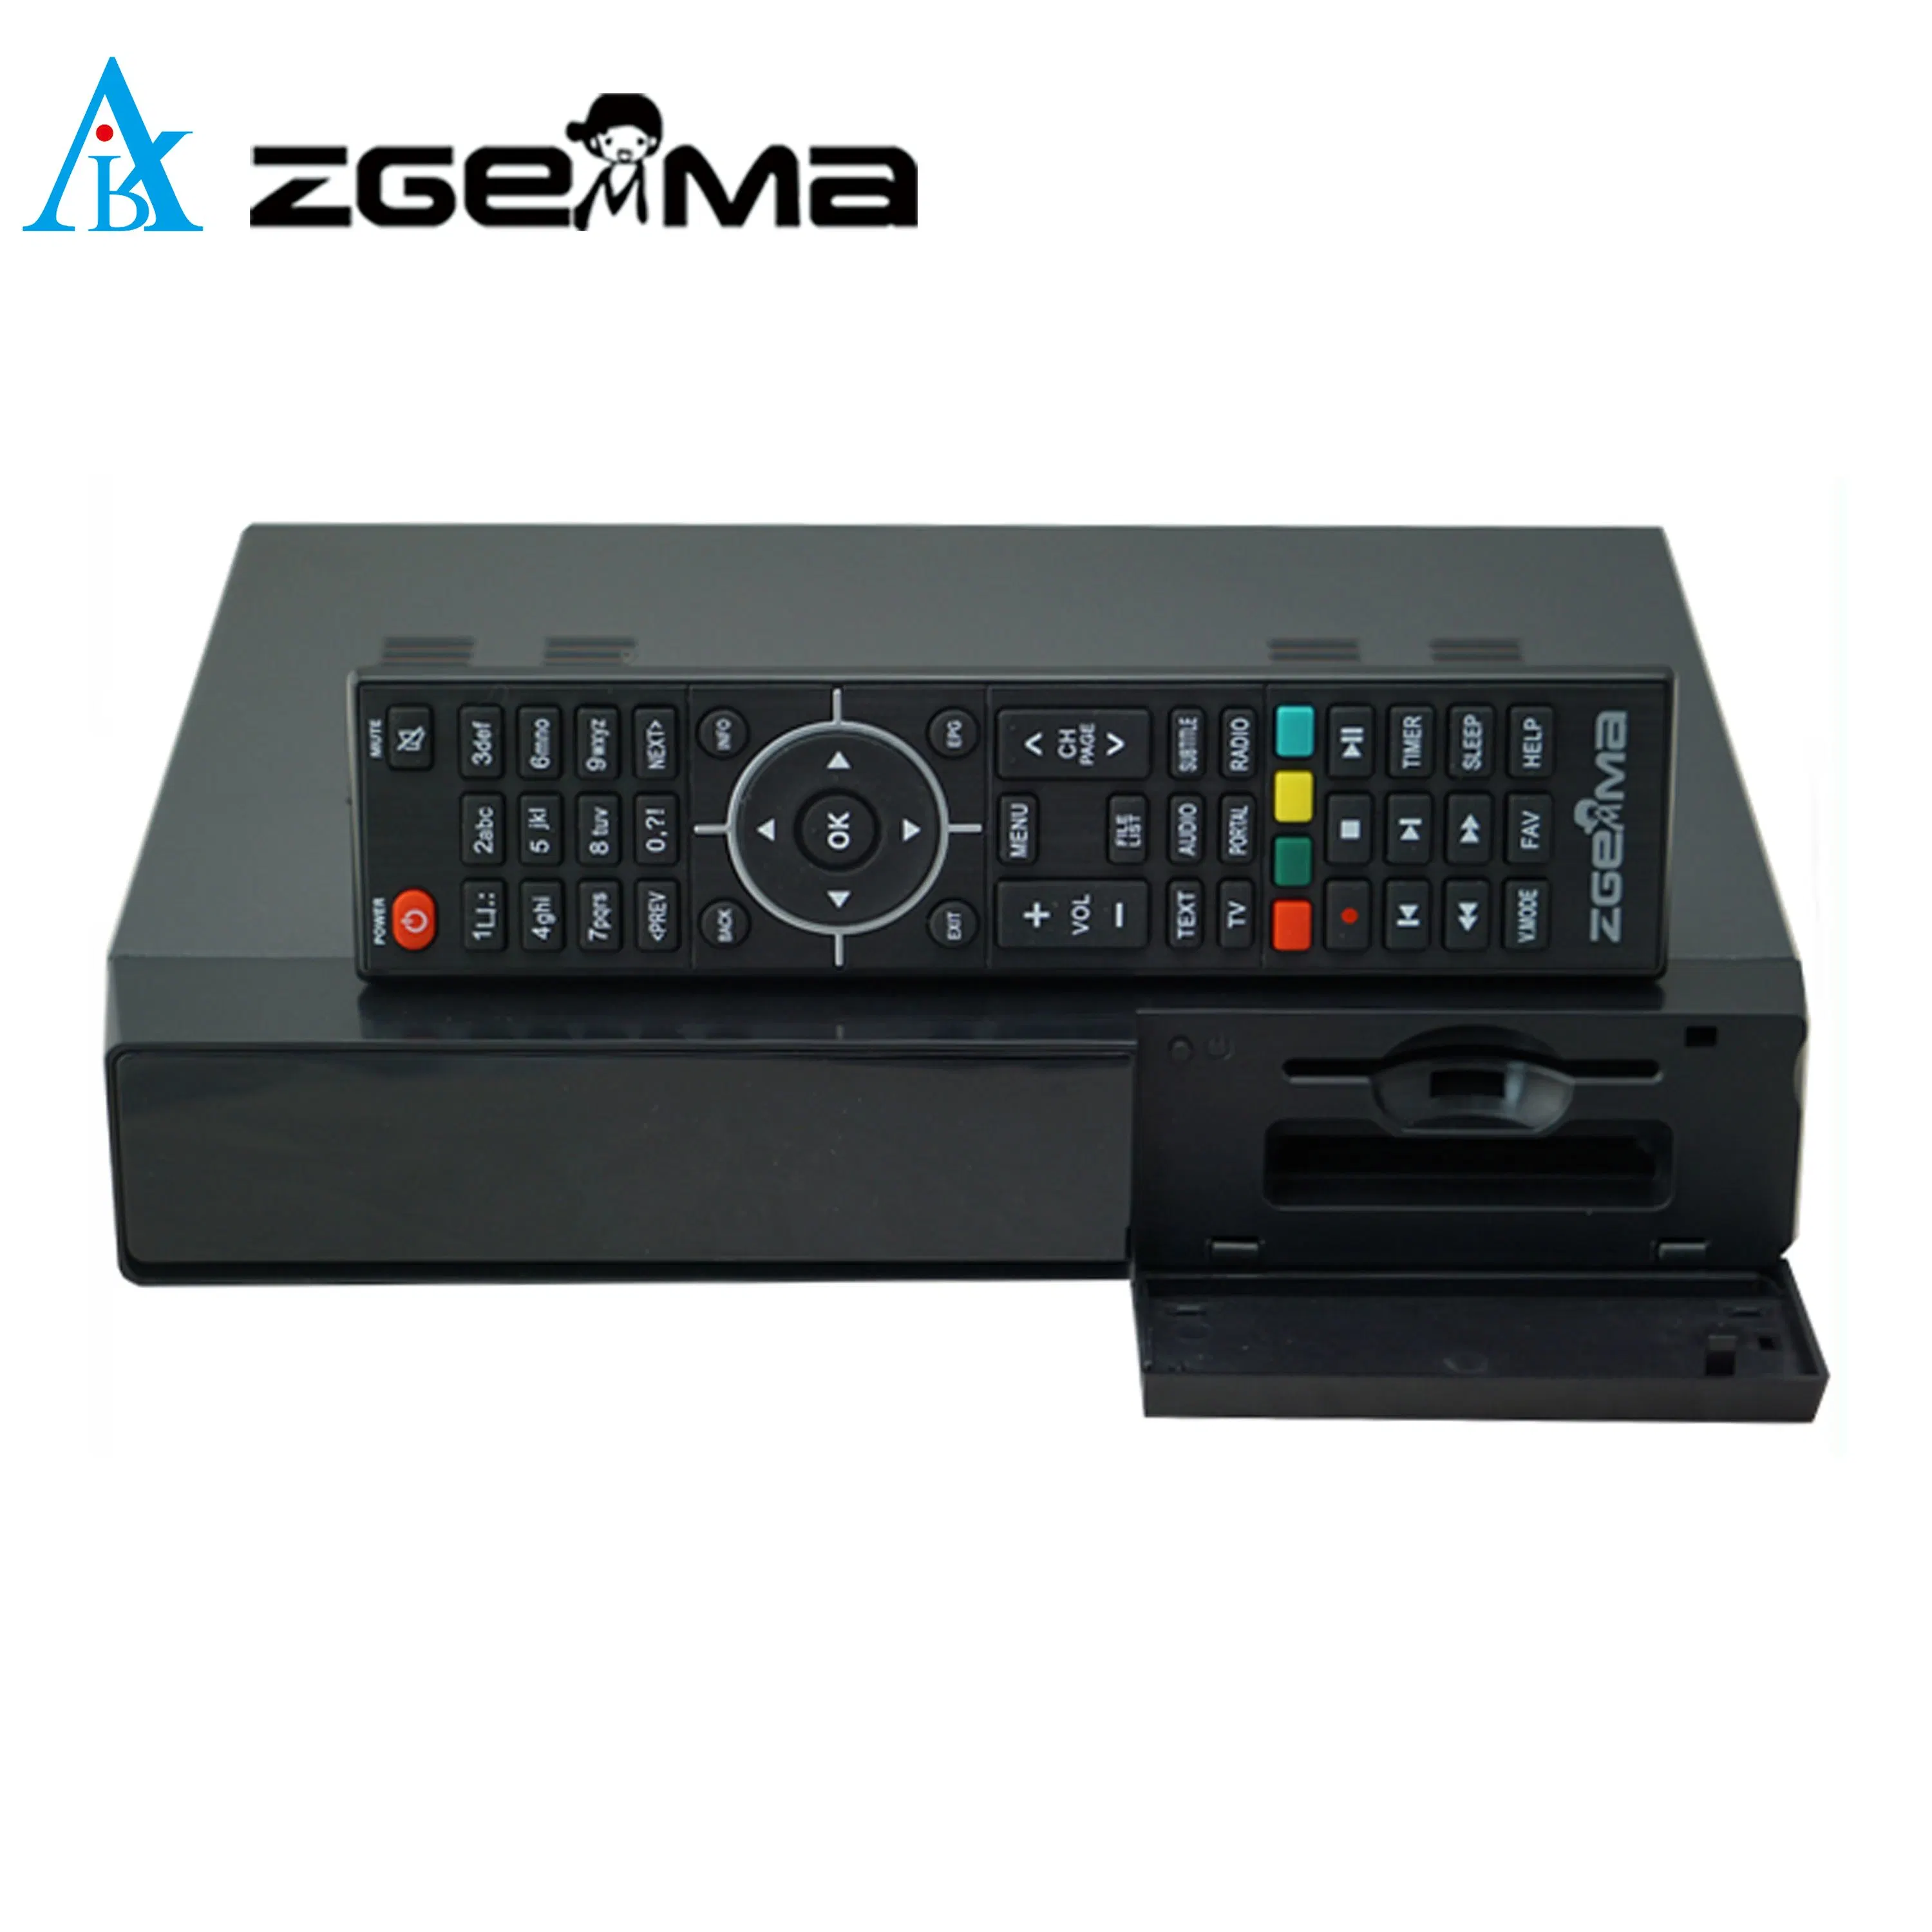 Zgemma H7s Satelliten-TV-Receiver - Enigma2 Linux OS, 2 * DVB-S2/S2X + DVB-T2/C Hybrid-Tuner TV Decoder